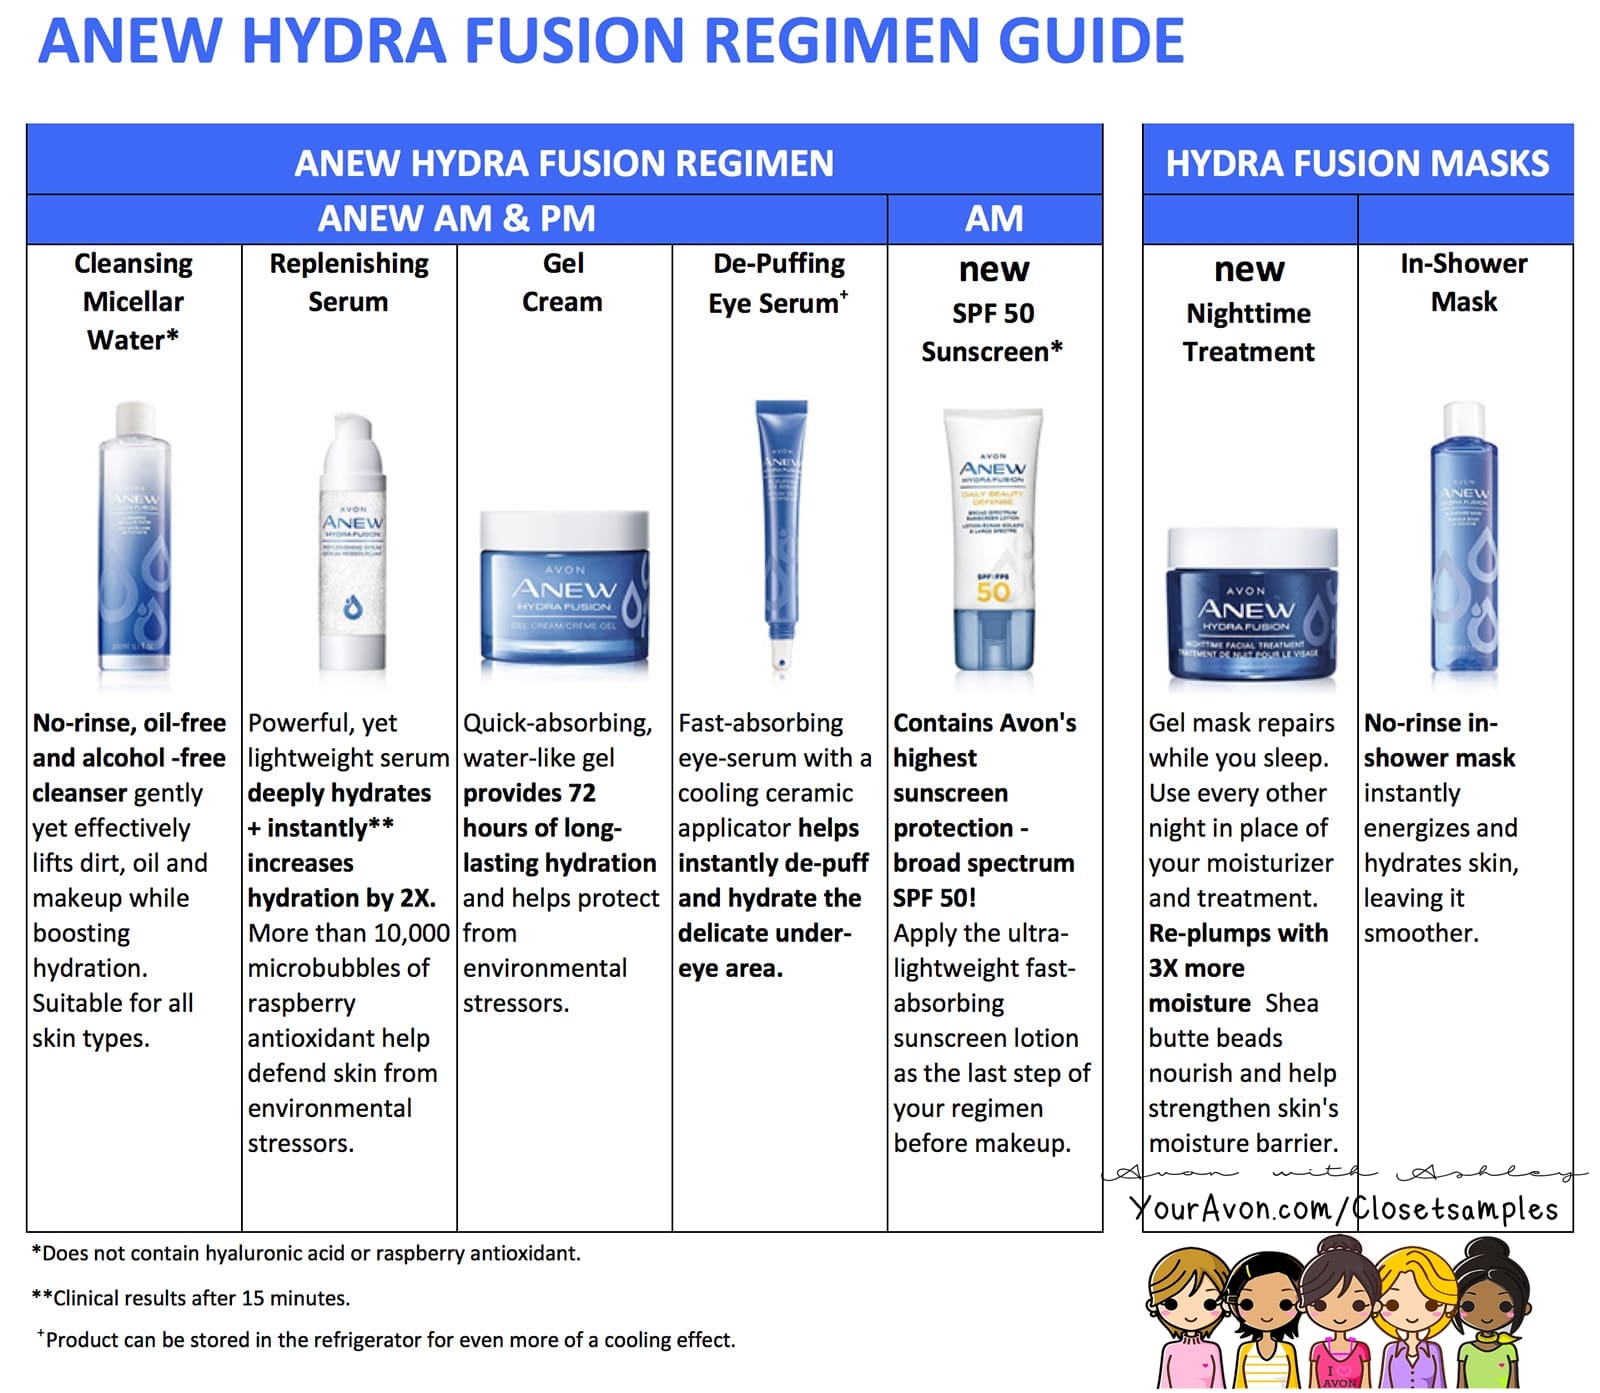 anew-hydra-fusion-regimen-guide-image.jpg